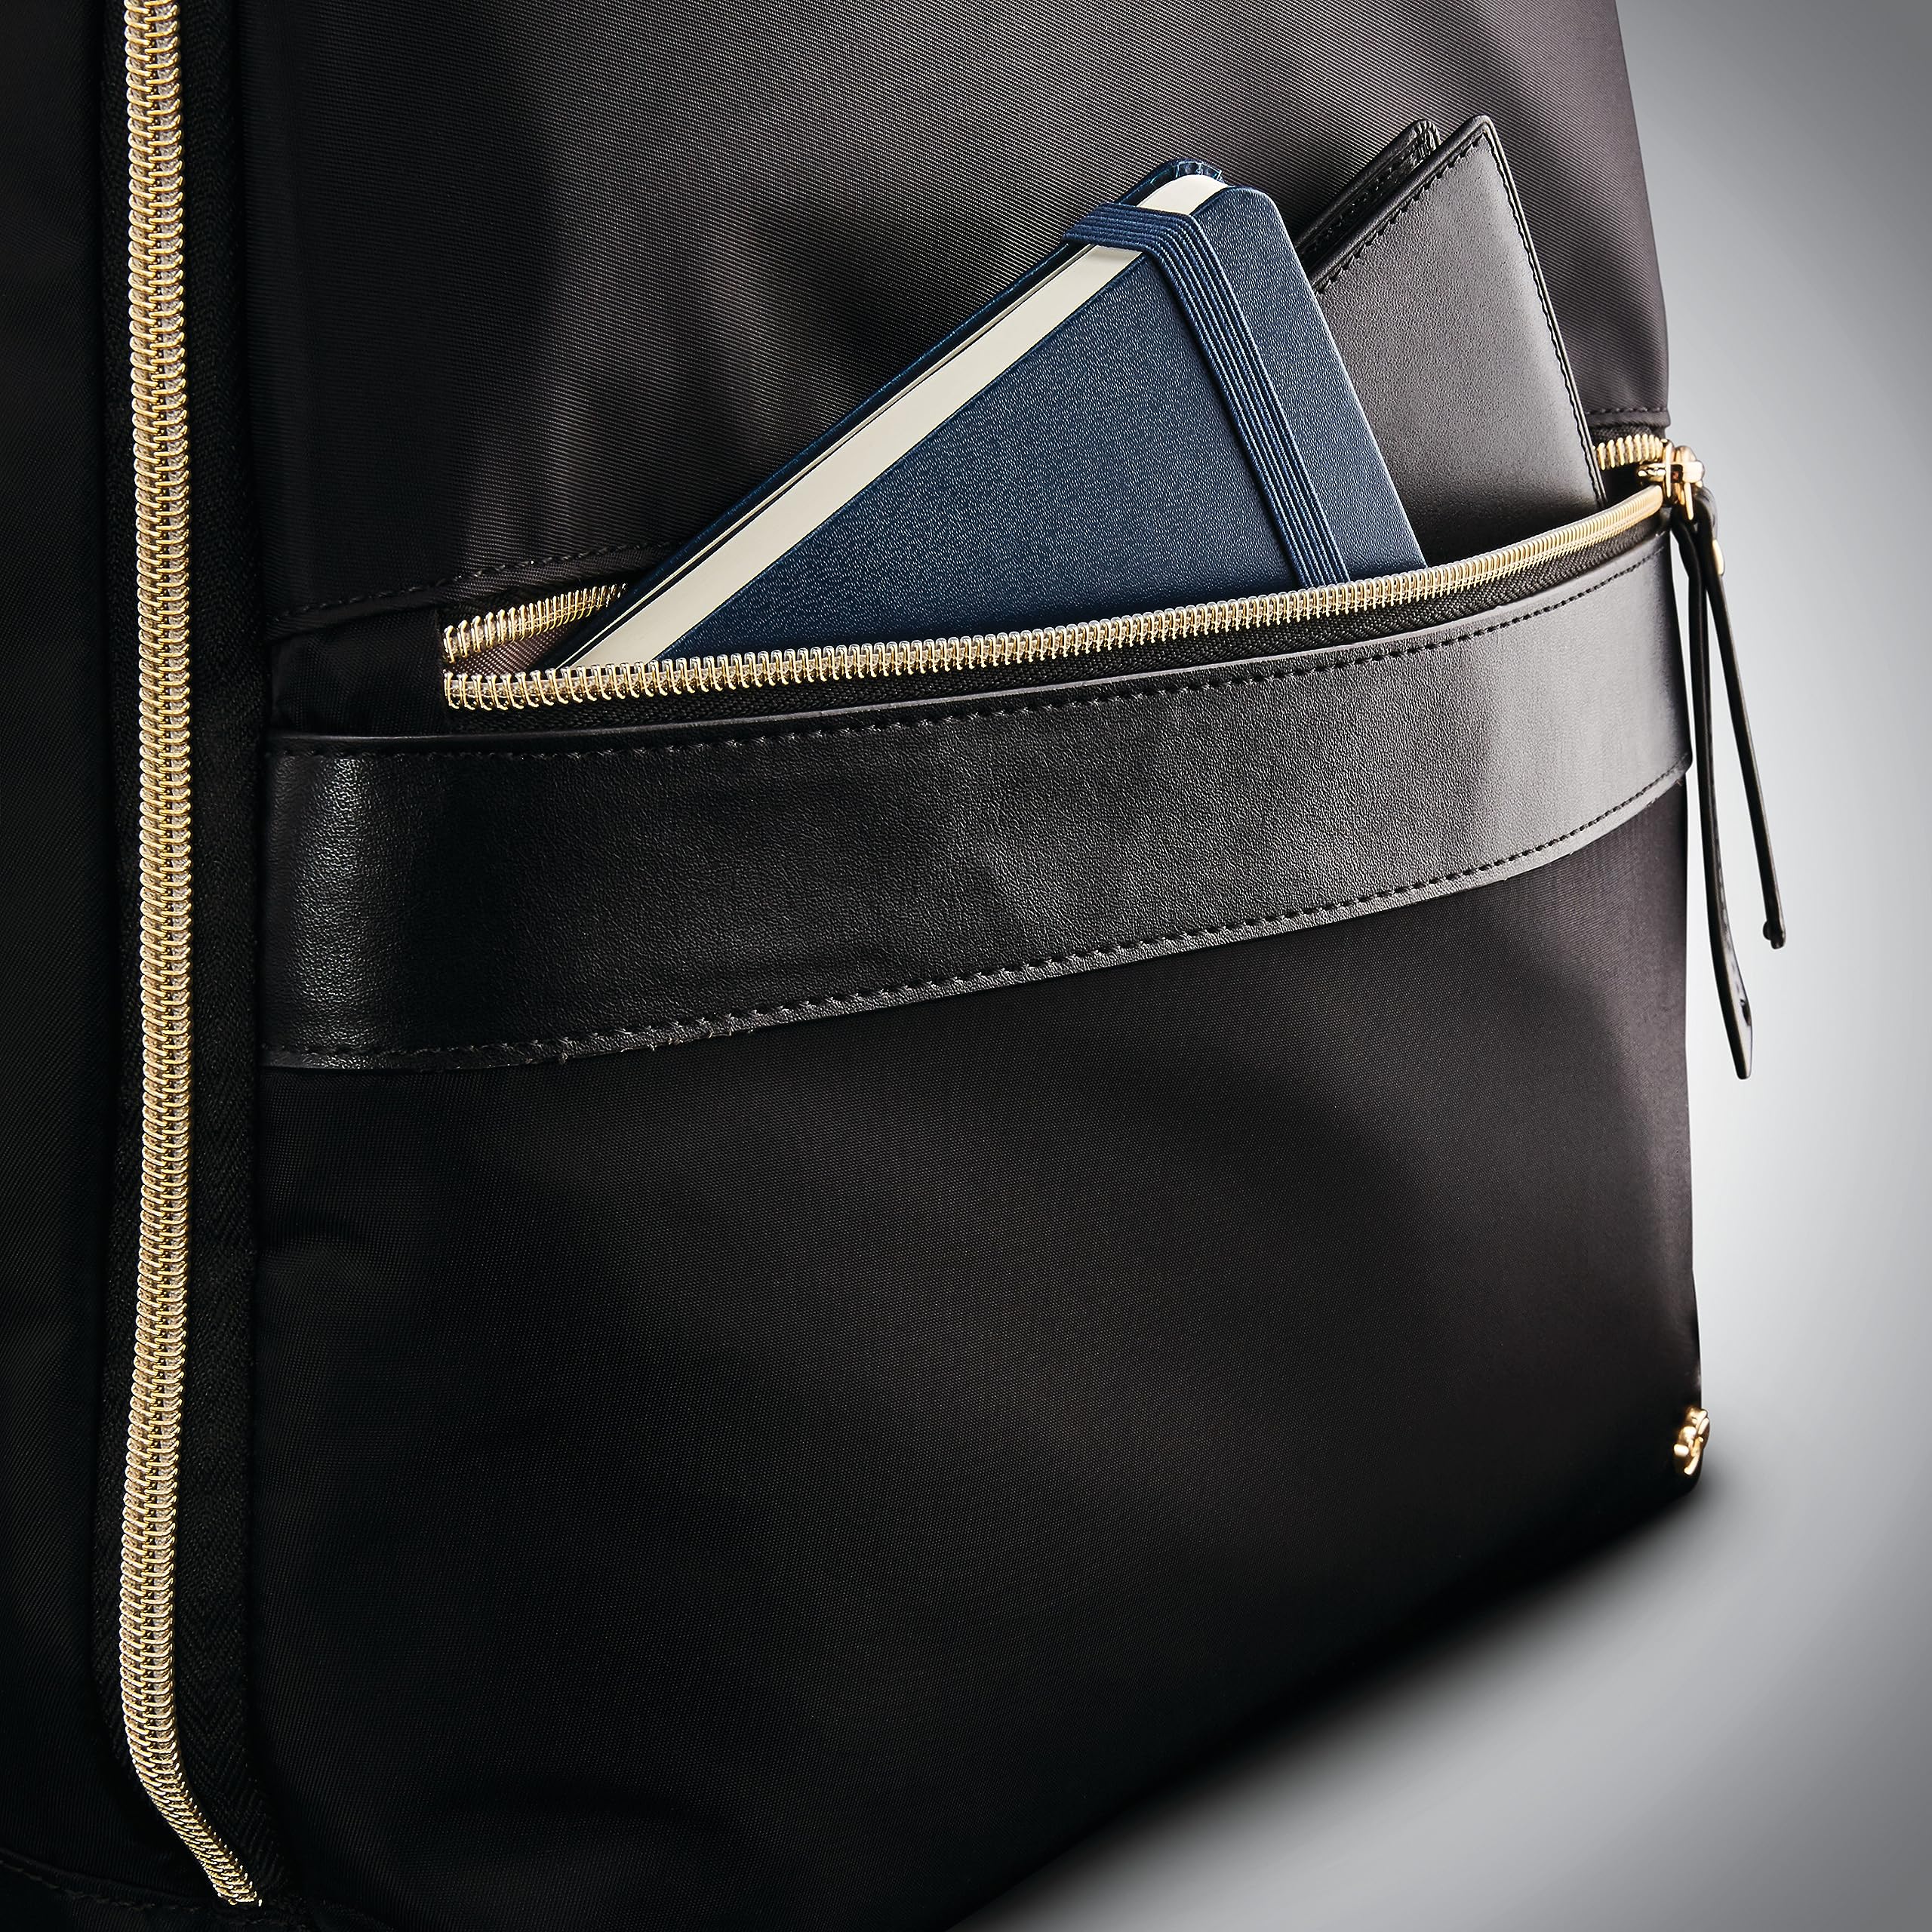 Samsonite Mobile Solution Essential Backpack, Black